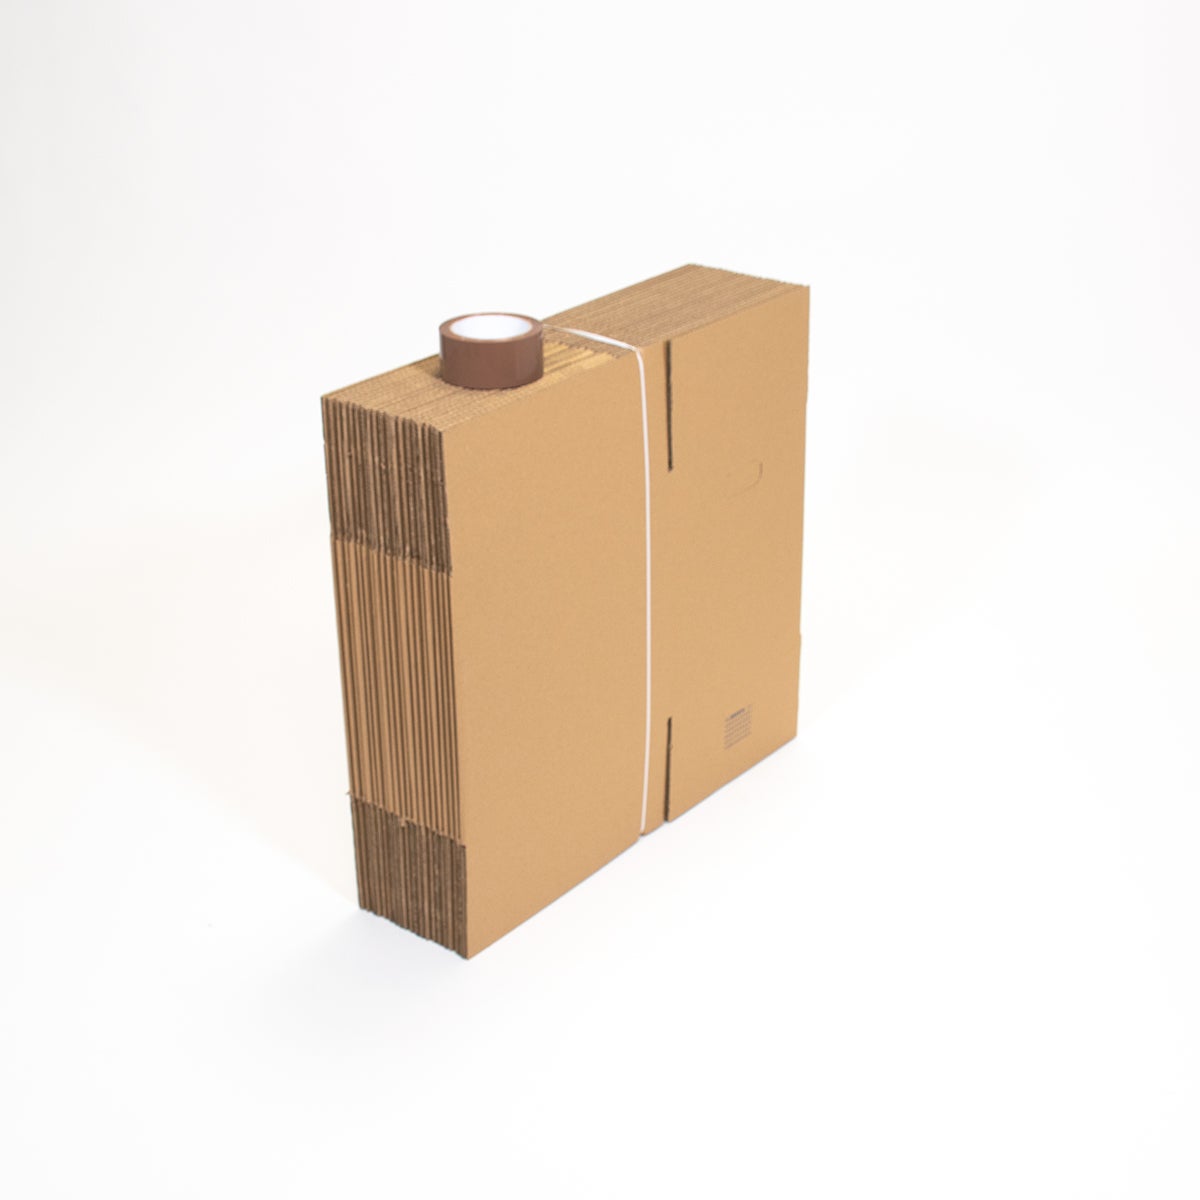 CARTONS DE DEMENAGEMENT : le pack de 20 cartons livres 35X27.5X33